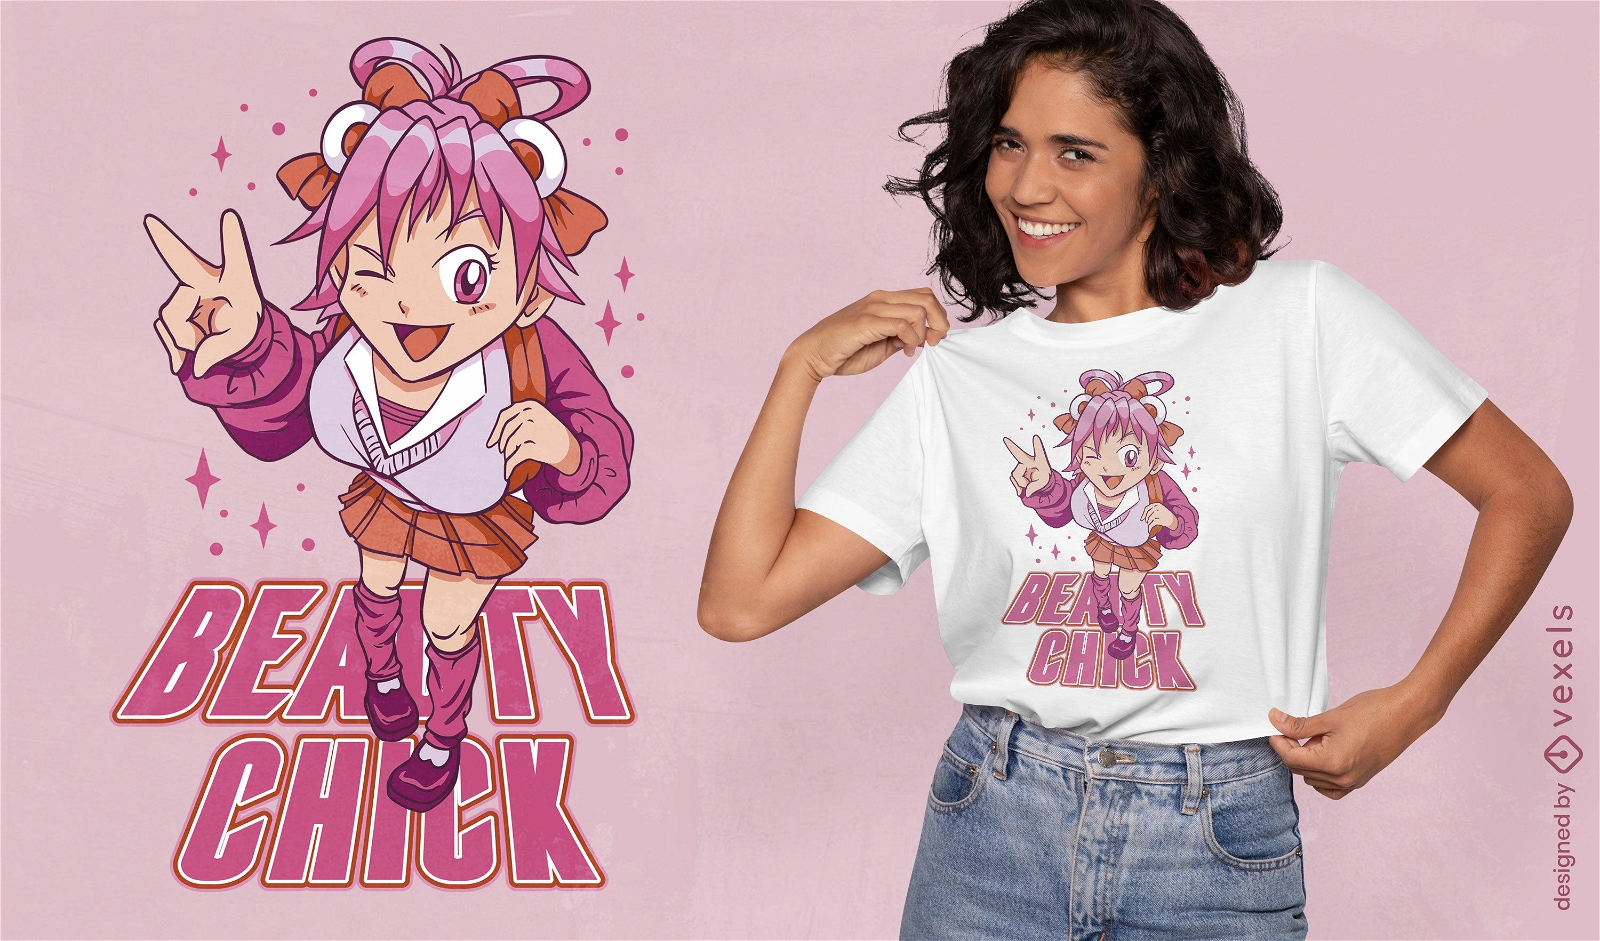 Pink hair anime girl t-shirt design